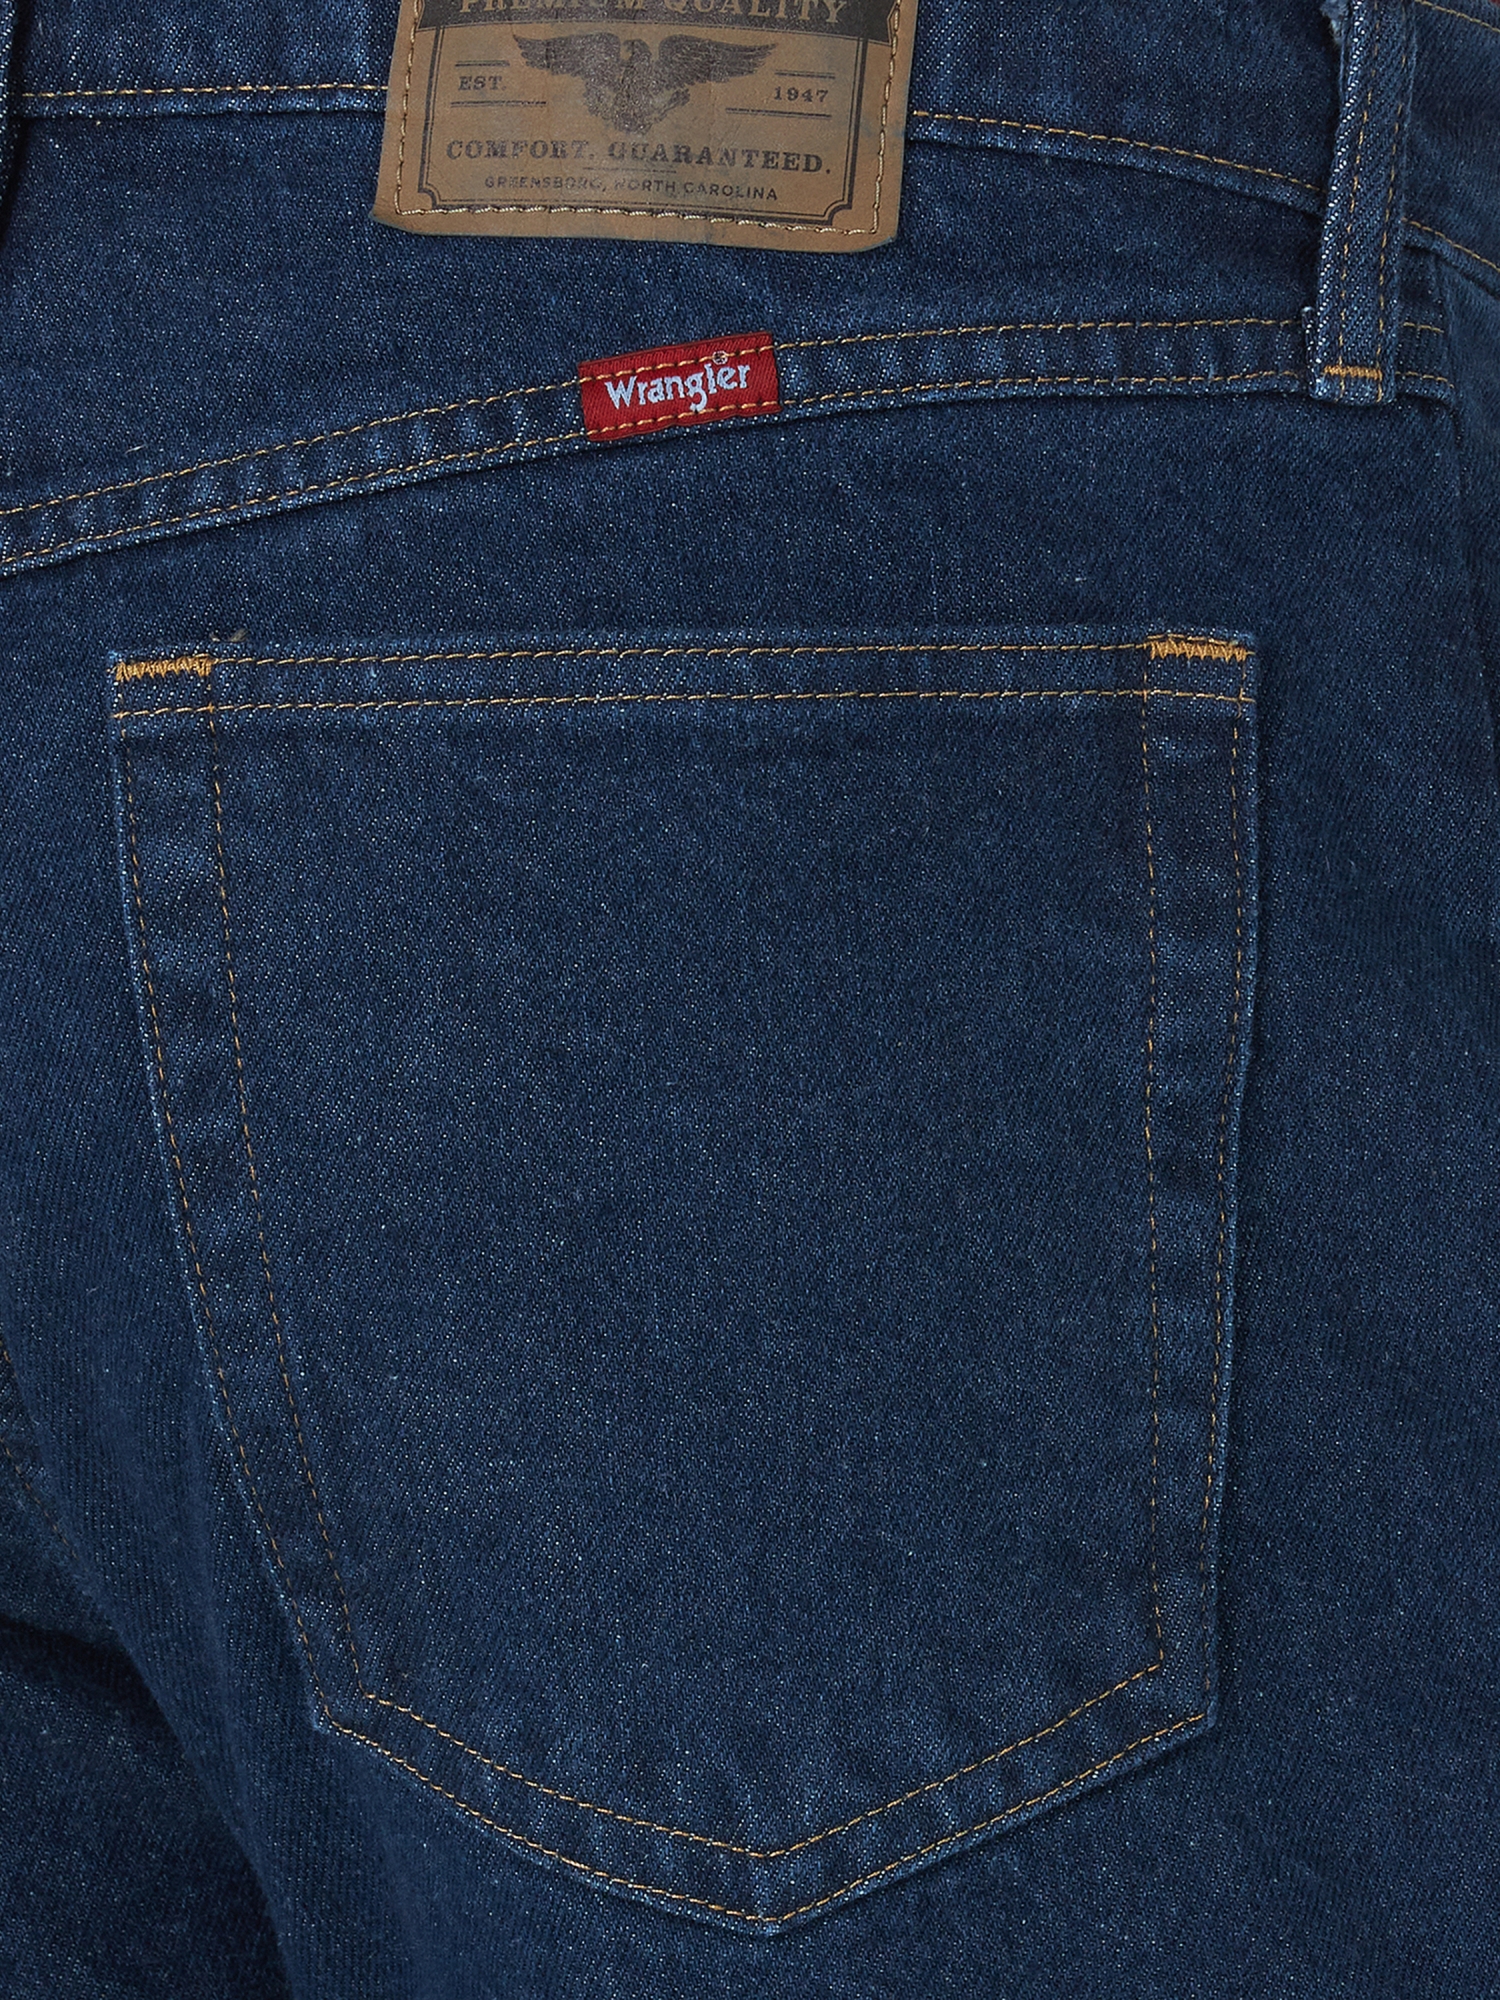 Wrangler Men's and Big Men's Regular Fit Jeans with Flex - image 4 of 7